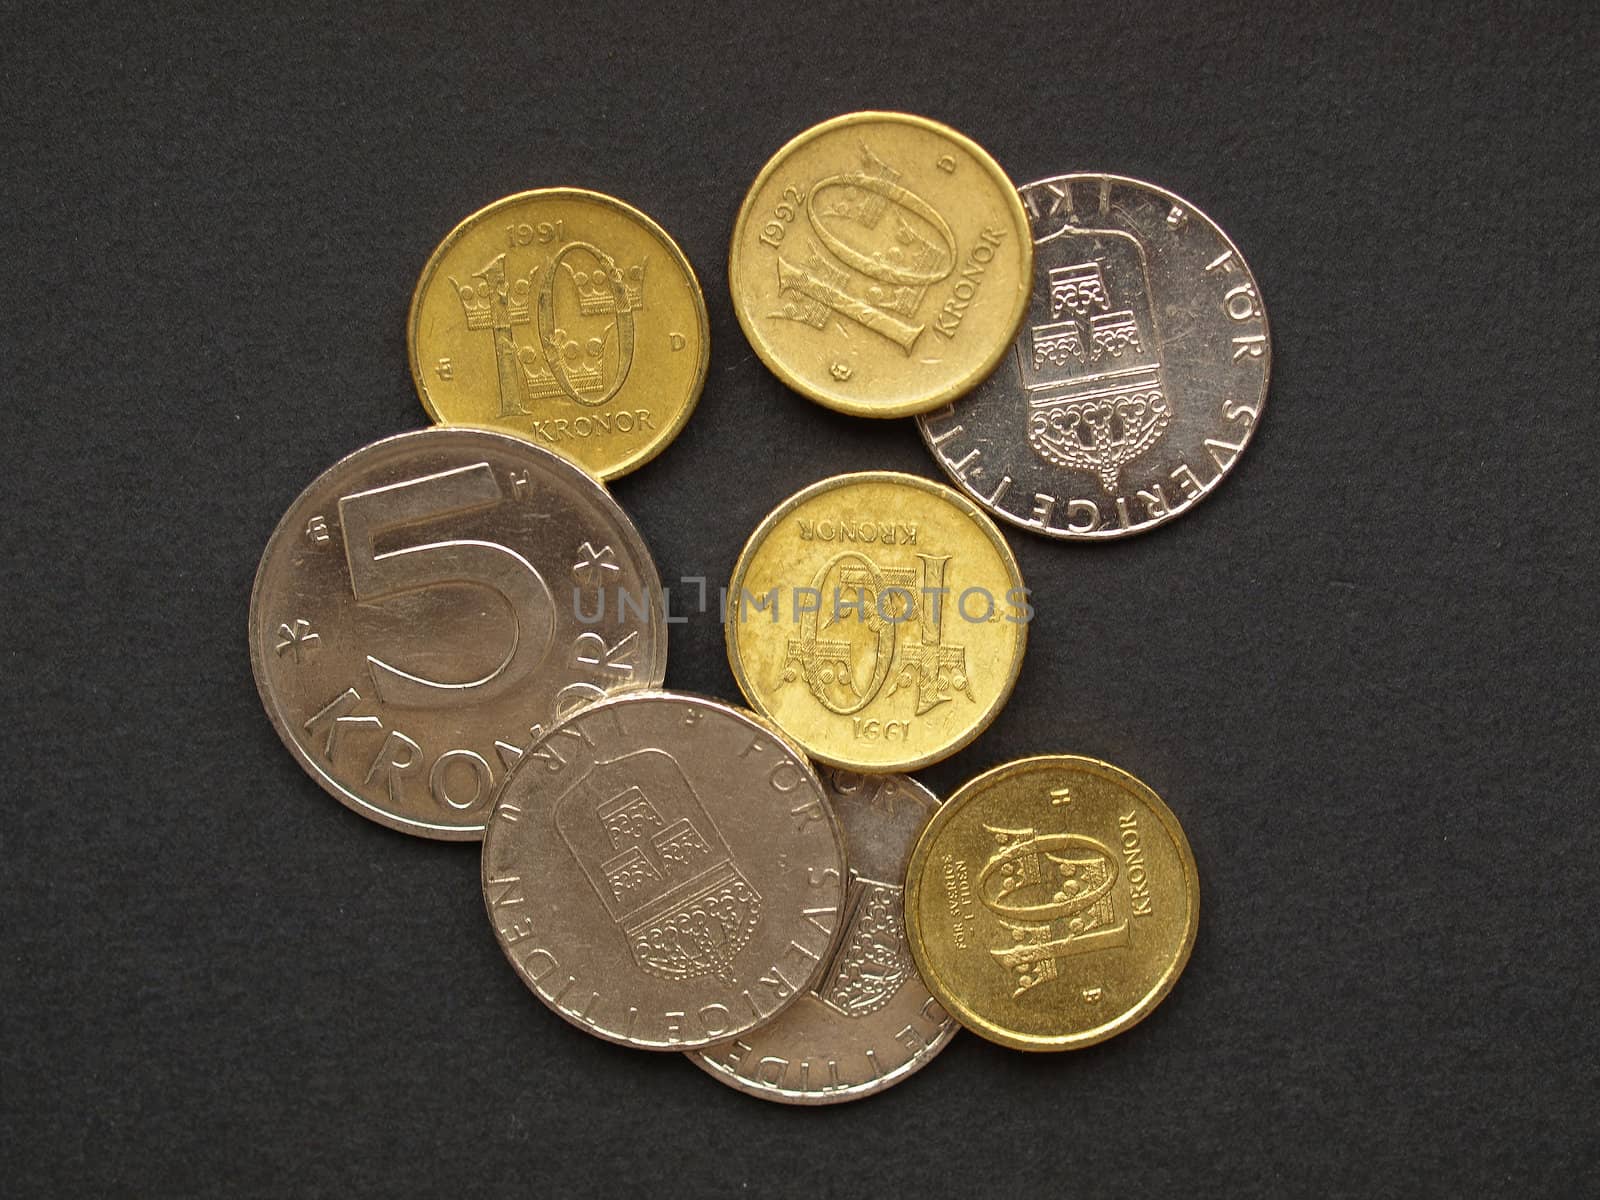 Swedish kruna currency coins